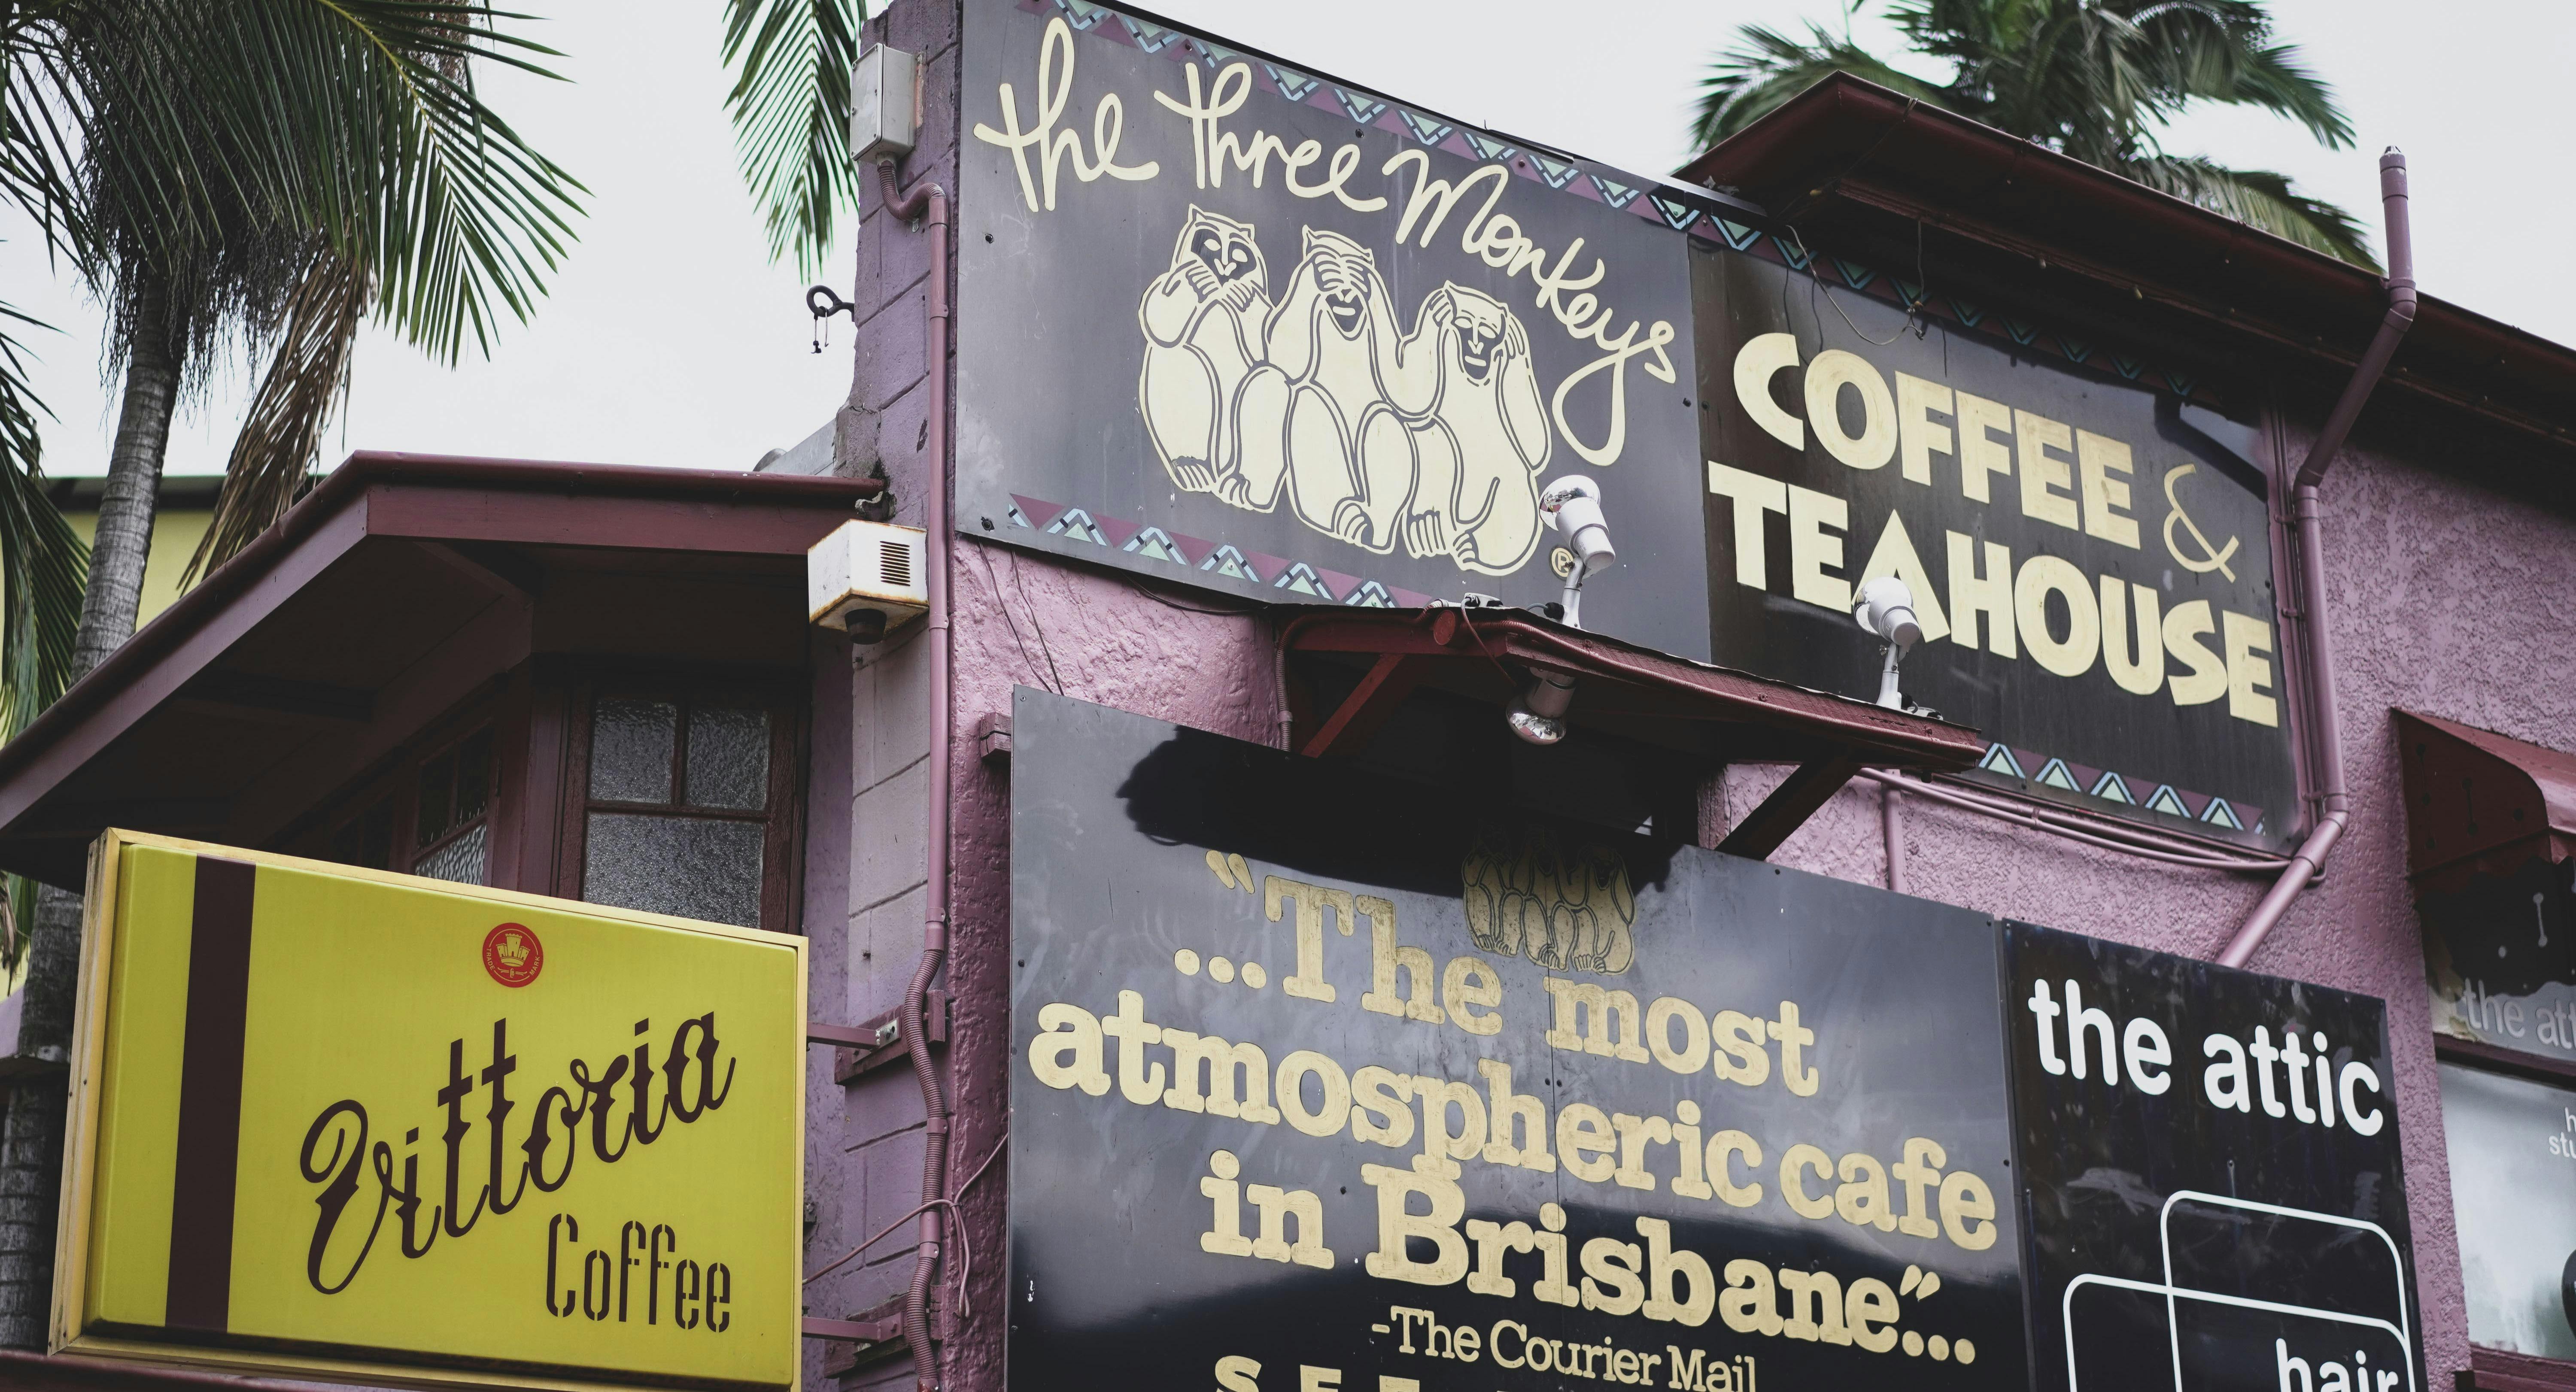 Photo of restaurant The Three Monkeys Coffee & Tea House in South Brisbane, Brisbane